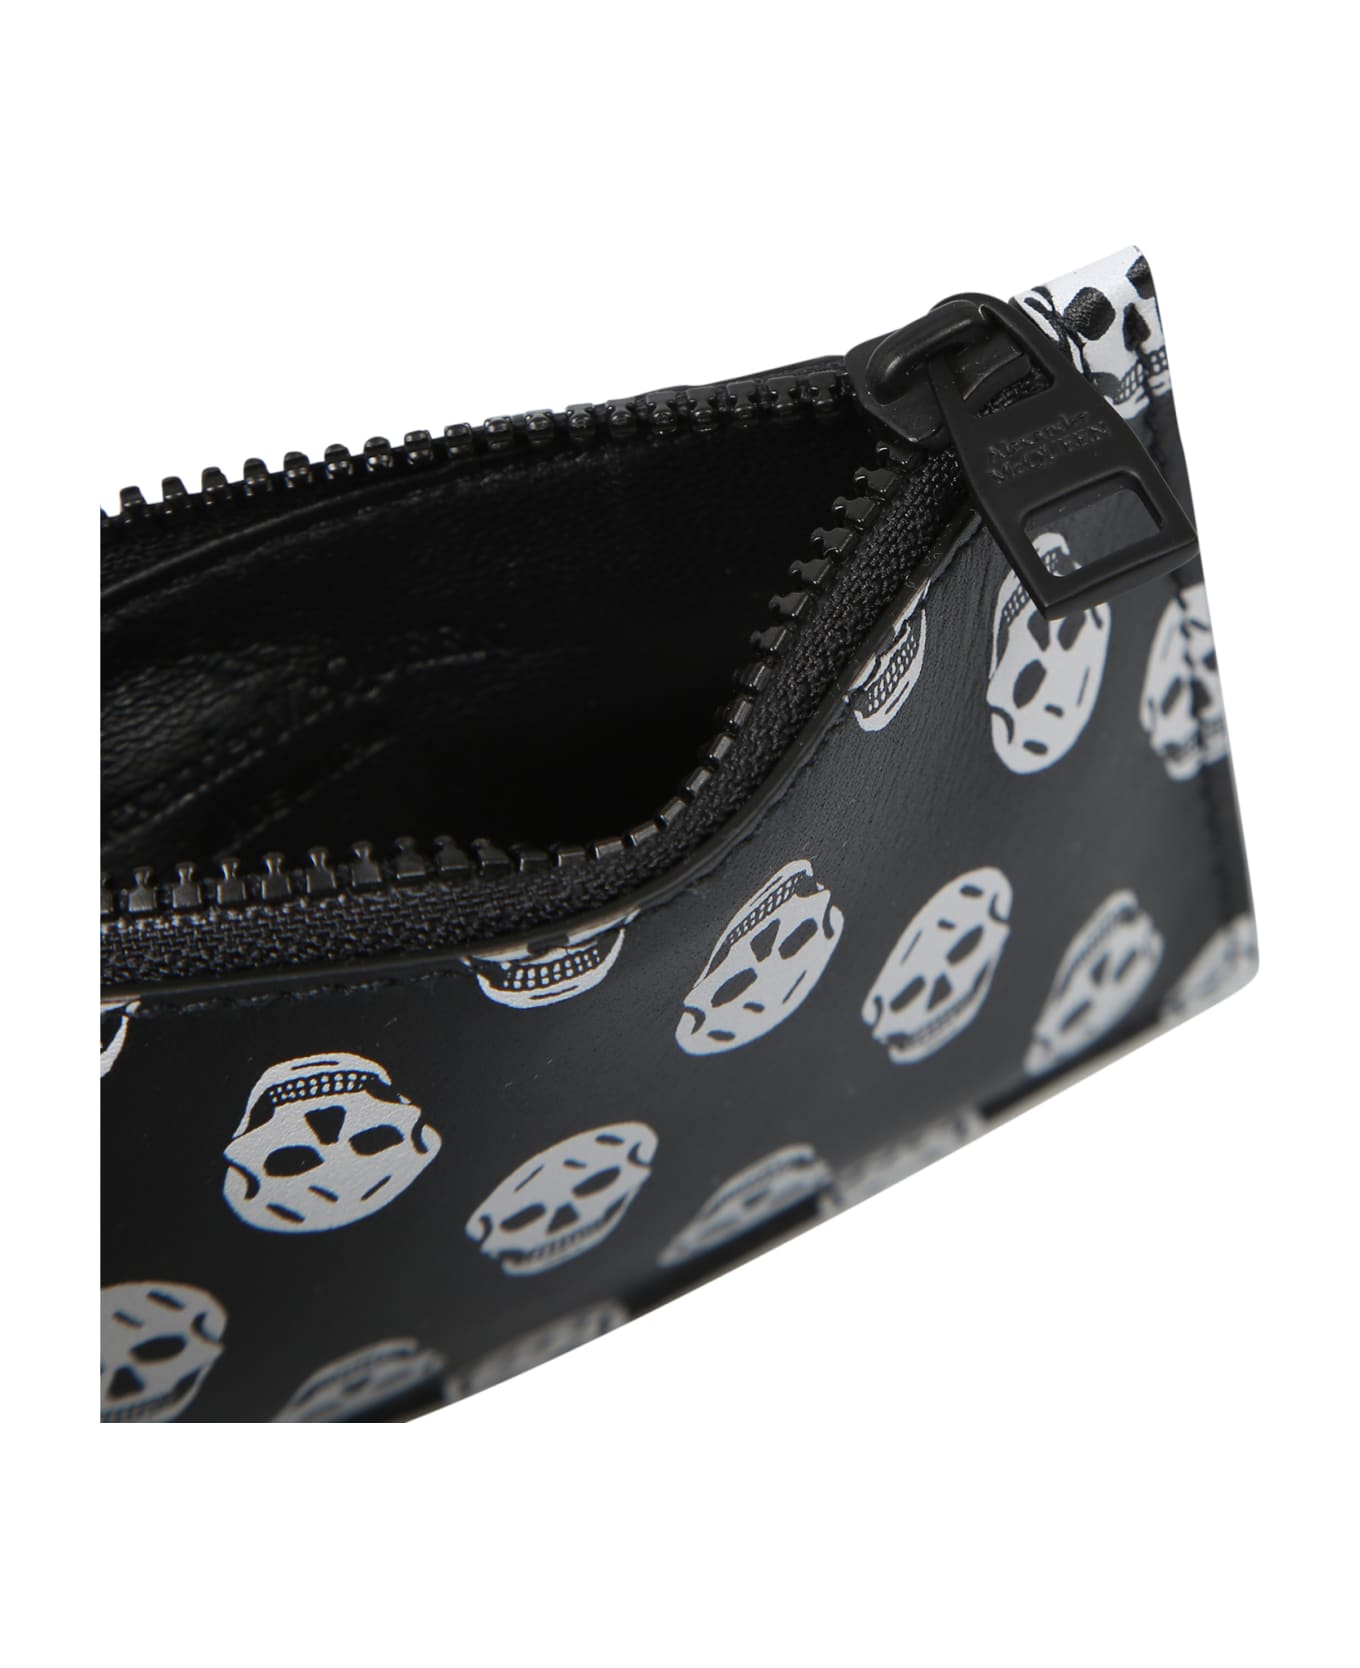 Alexander McQueen Leather Cardholder - Black 財布